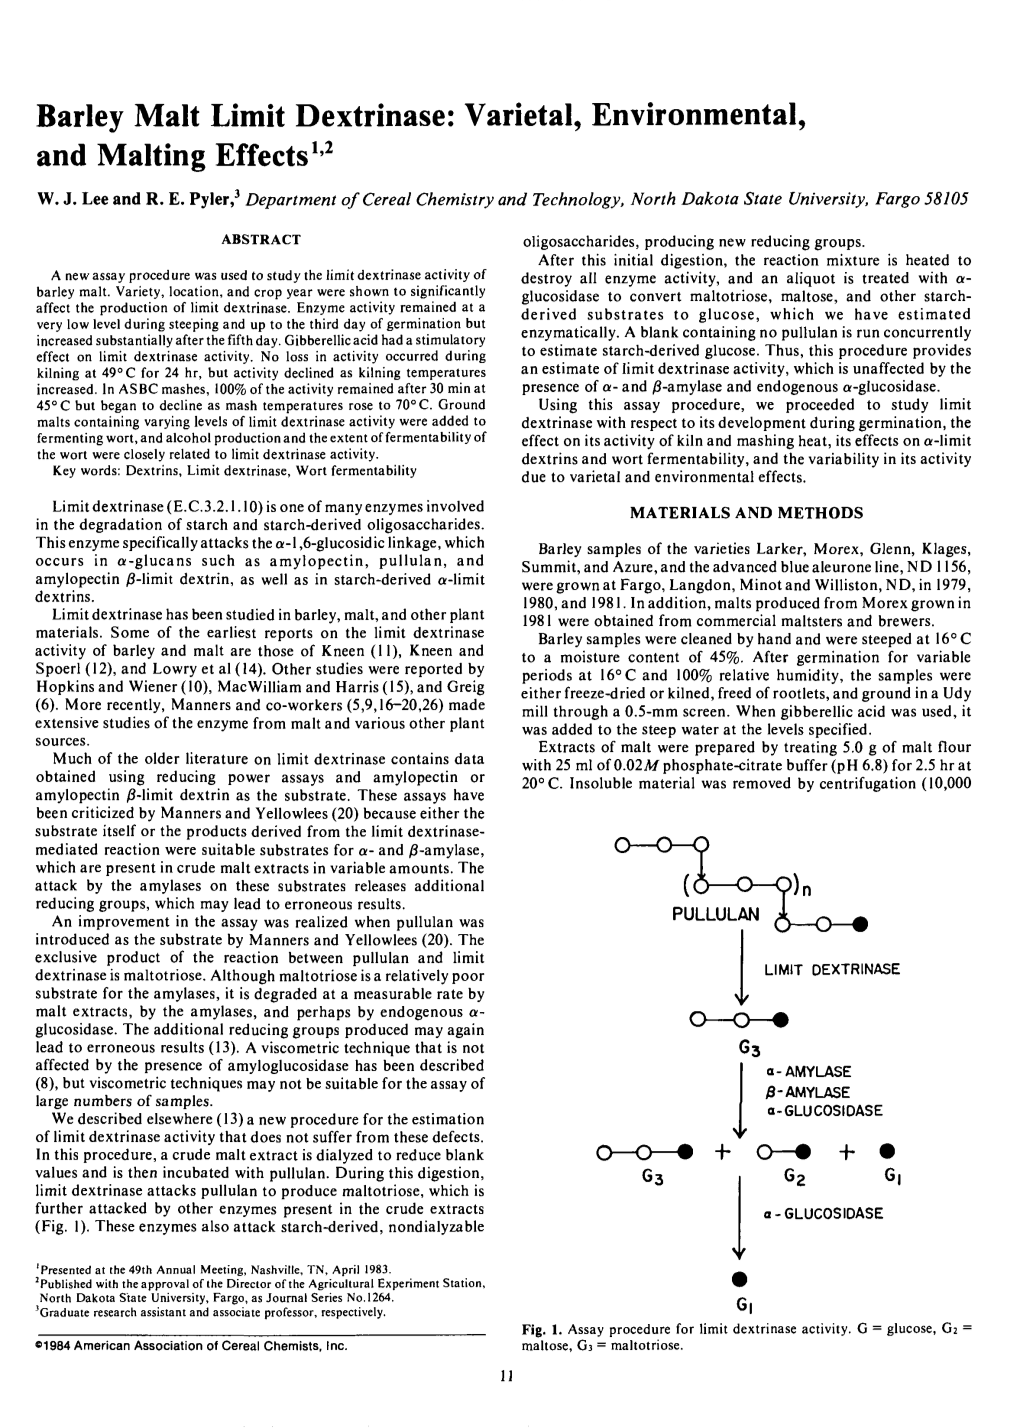 Barley Malt Limit Dextrinase: Varietal, Environmental, and Malting Effects12